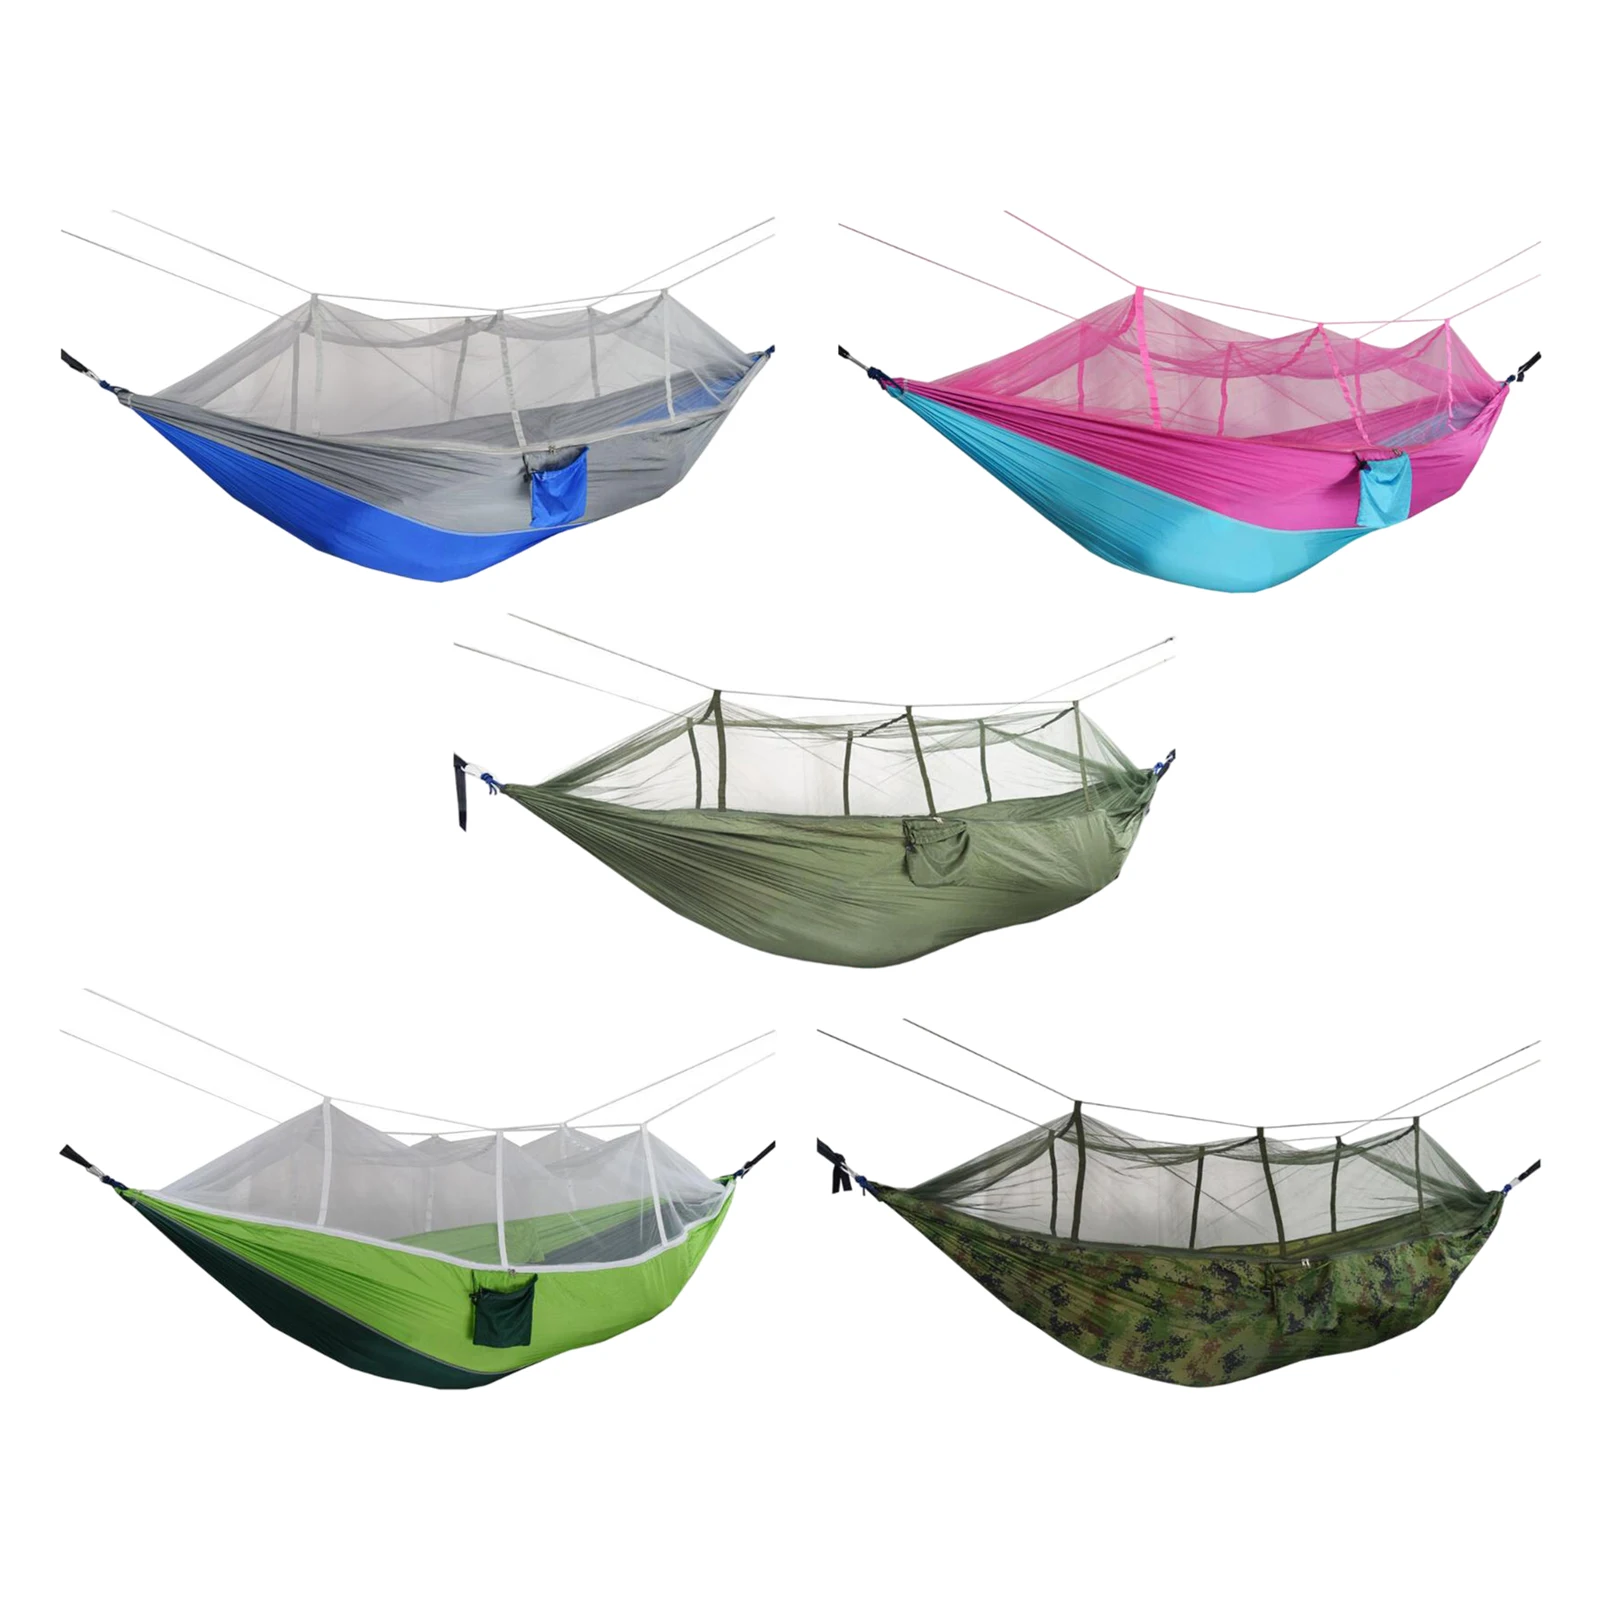 

Camping Hammock with Net Lightweight Hanging Sleeping Bed Mosquito Net Bug Block Swing Indoor Backpacking Hiking Backyard